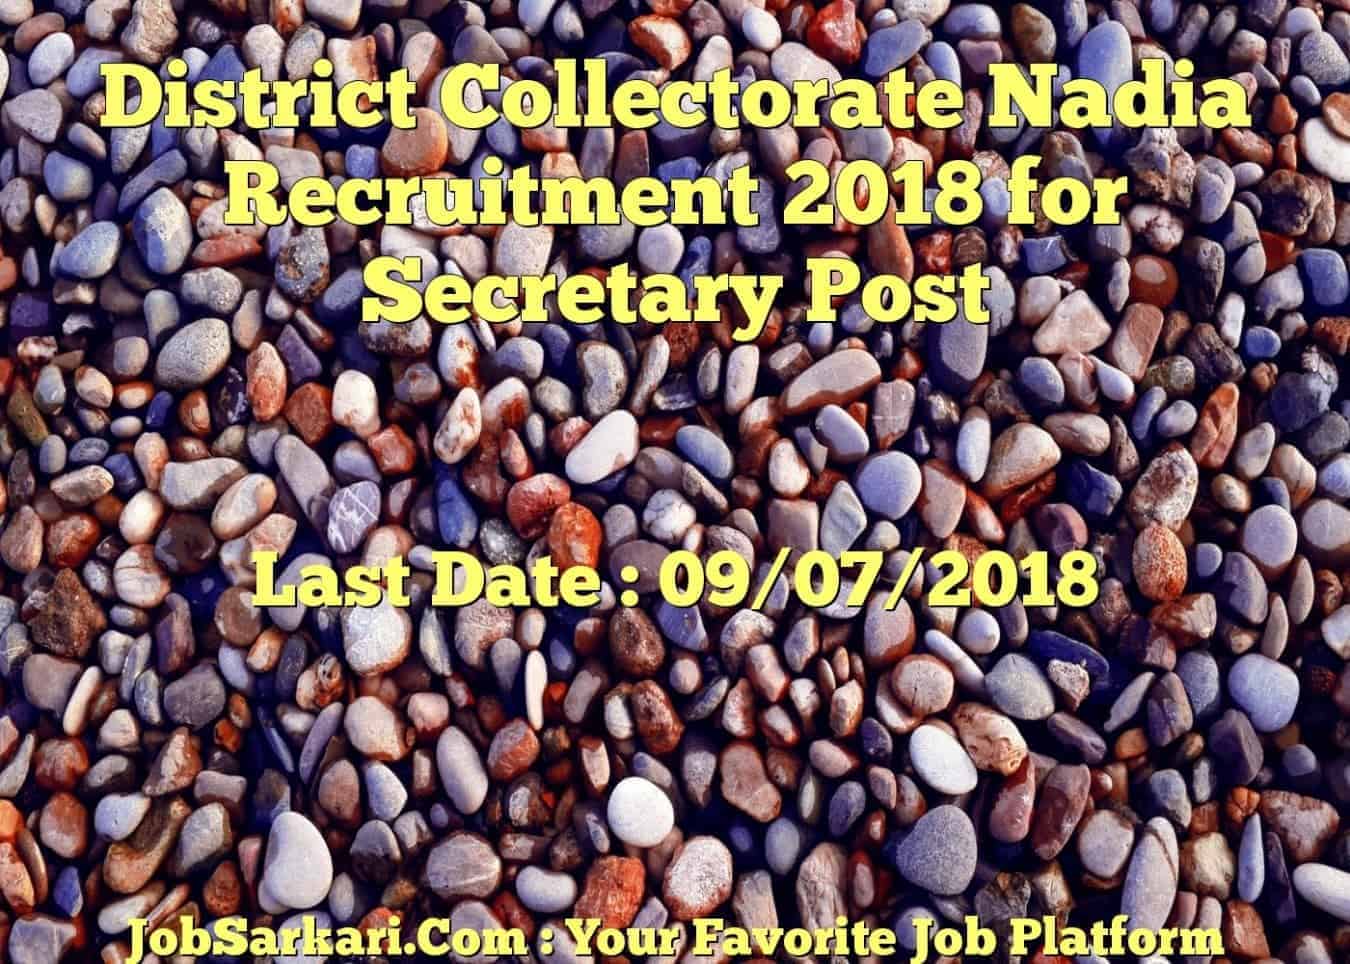 District Collectorate Nadia Recruitment 2018 for Secretary Post